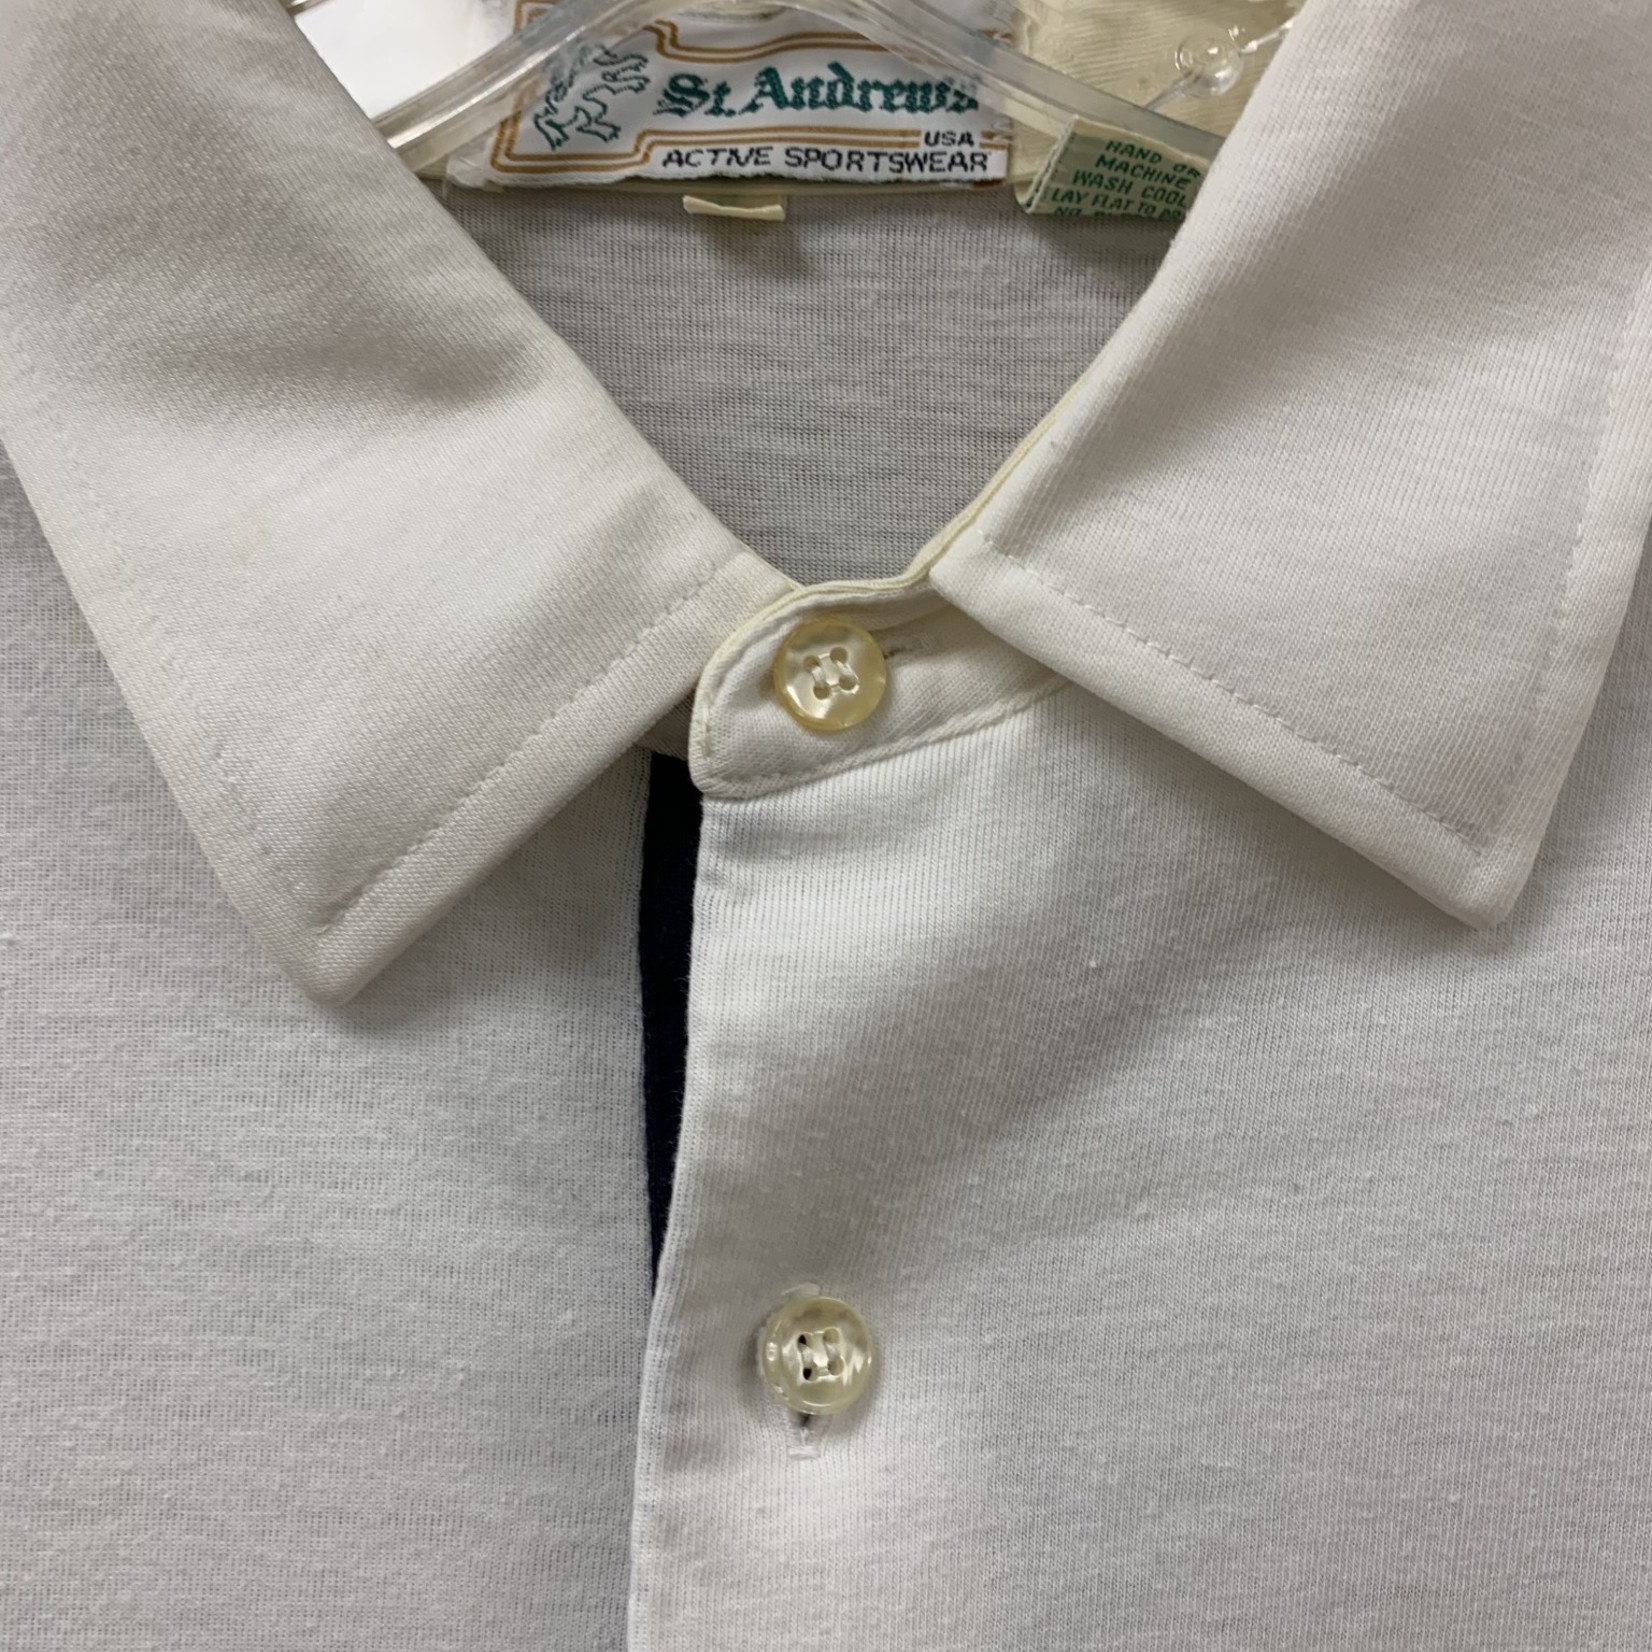 Mission Zero Men's Vintage Aloha Shirt - Polo or Basic St. Andrews Sportswear striped polo Large